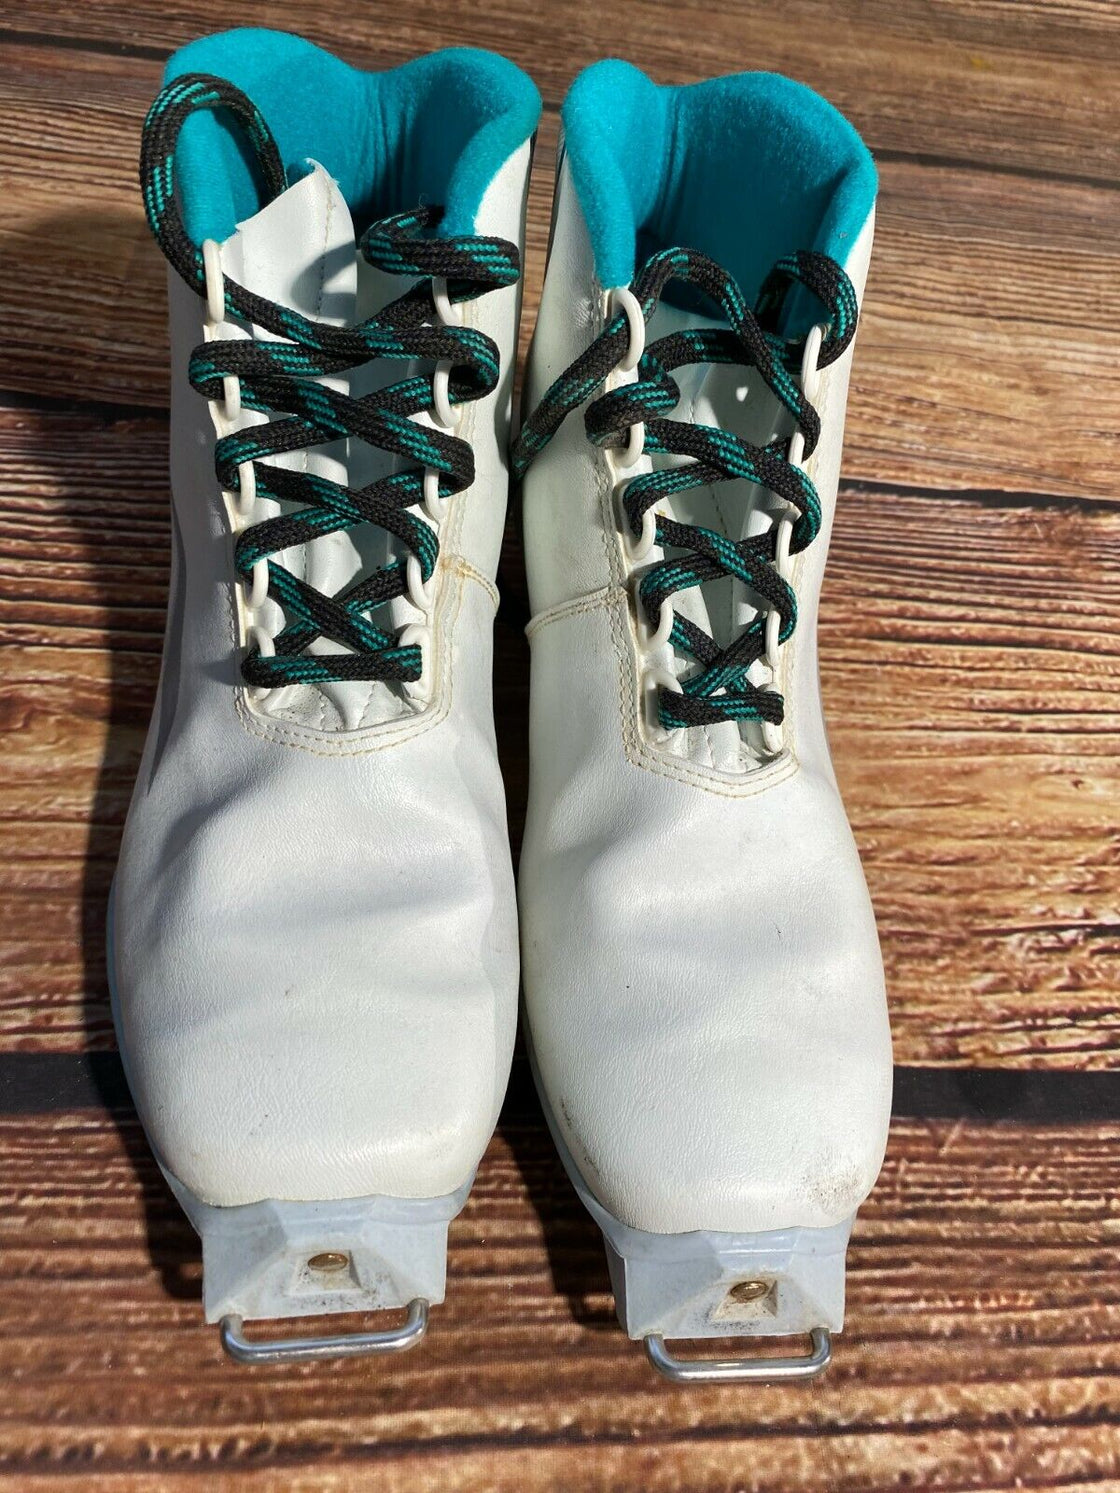 Tecno Pro Nordic Cross Country Ski Boots Size EU41 US8 SNS Old Bindings